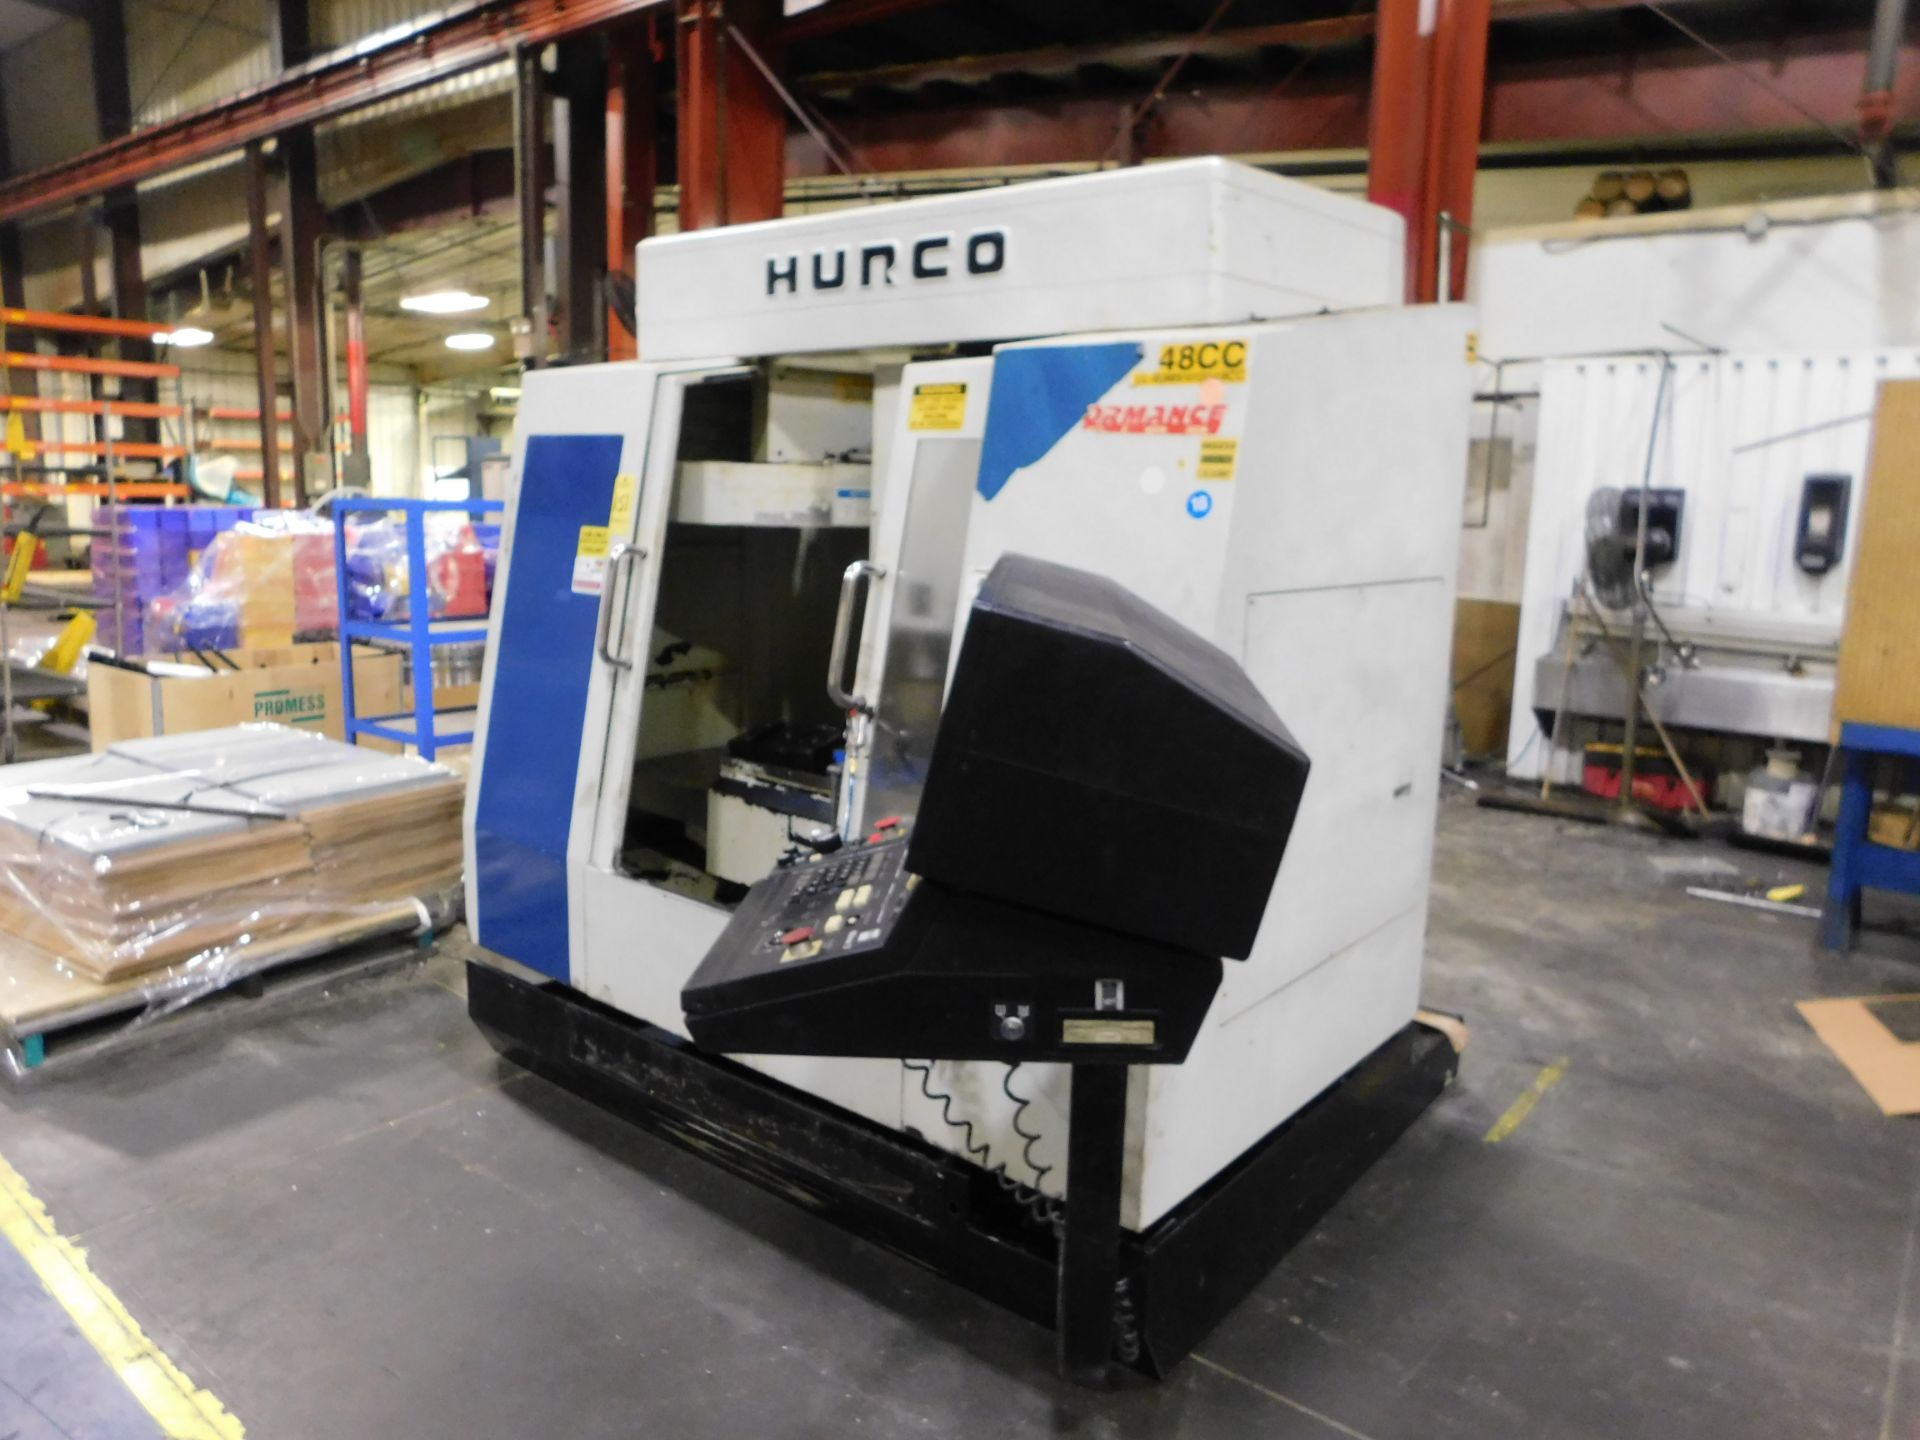 Hurco Model BMC-30M CNC Vertical Machining Center, Hurco CNC Control, 40 Taper, 24 ATC, 8,000 RPM, - Image 3 of 4